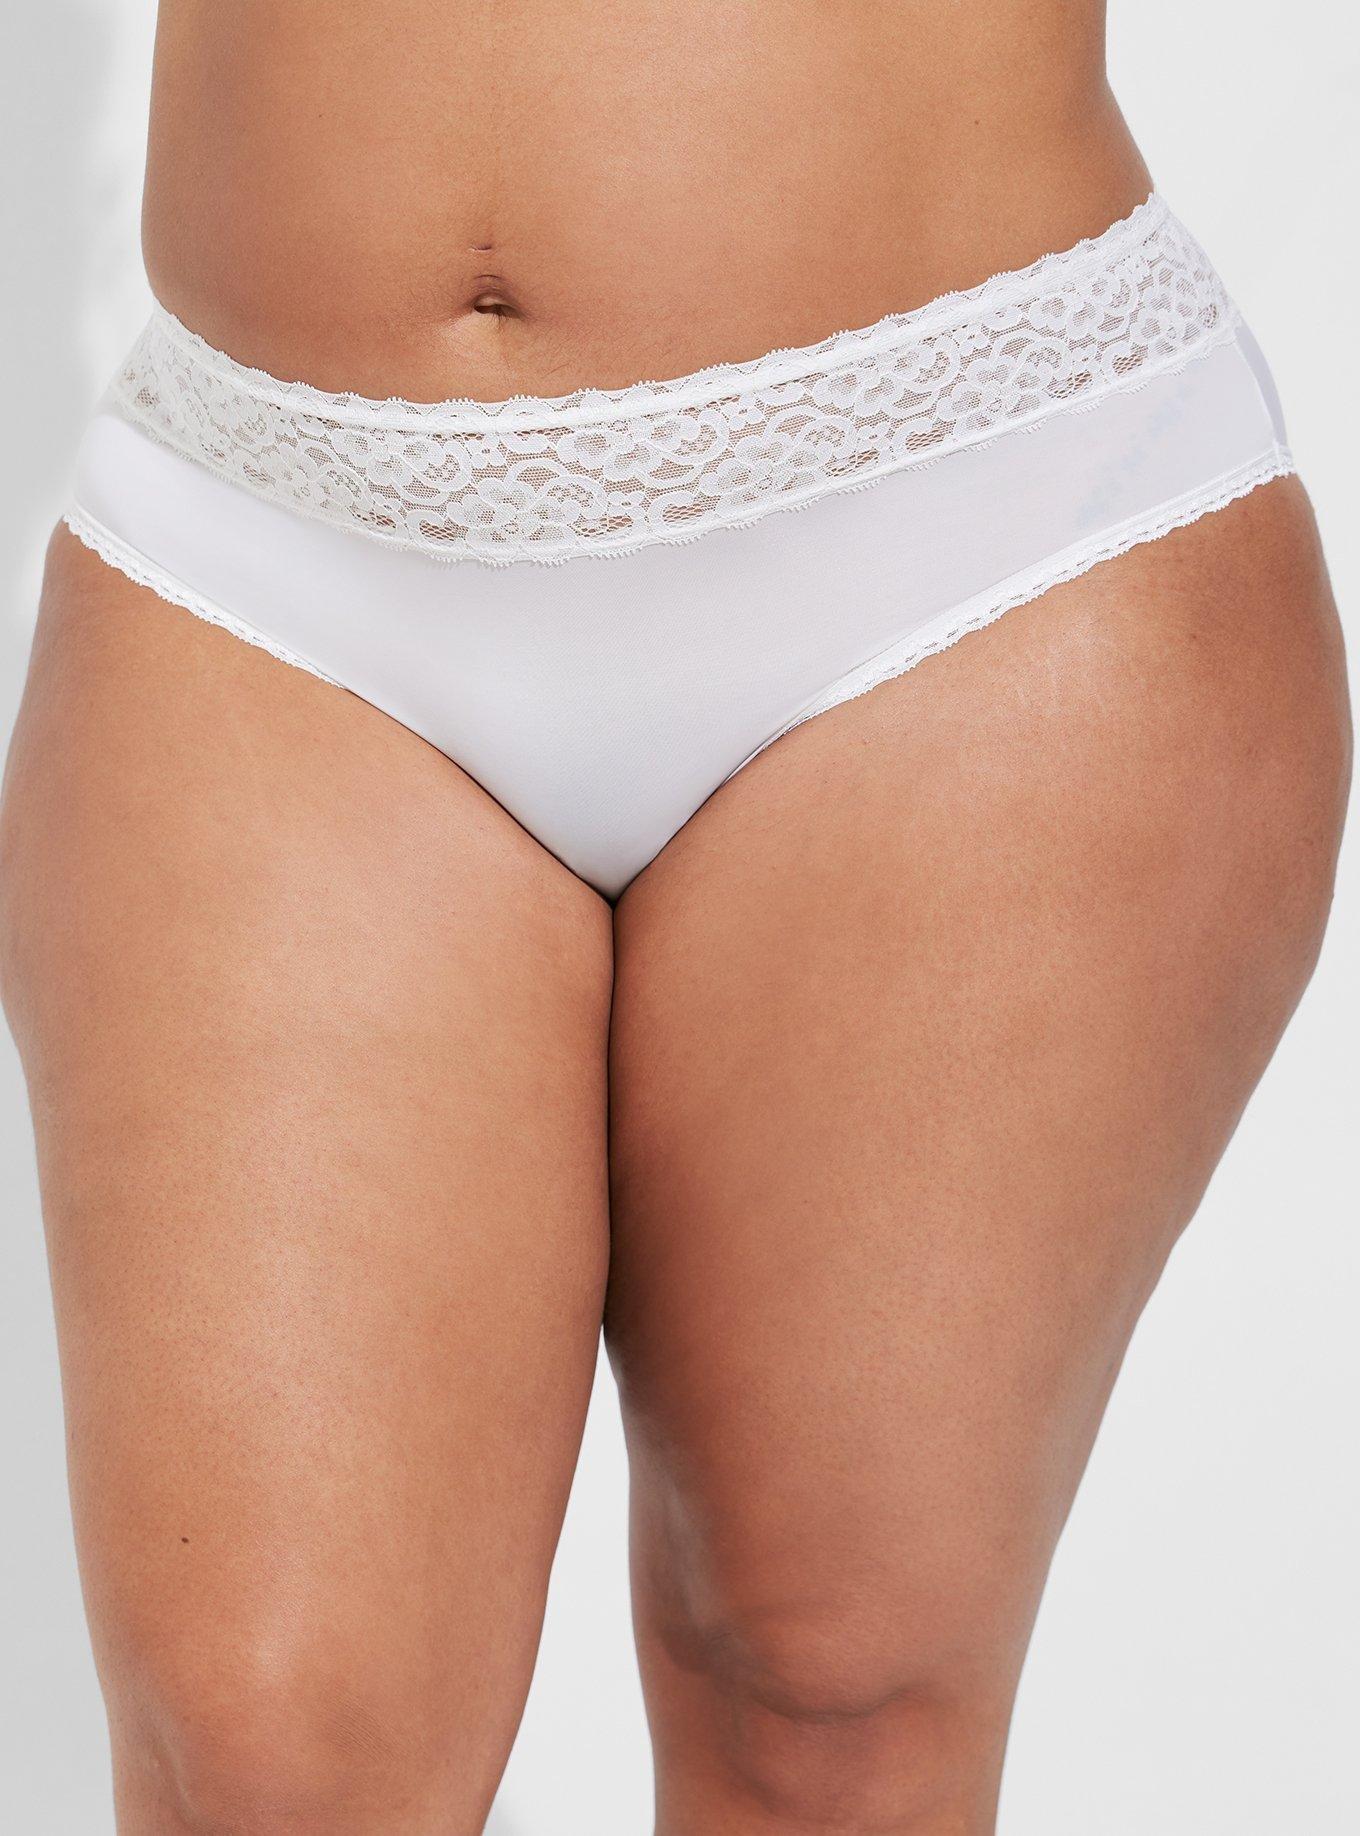 Torrid Thong Panties Underwear Curve Floral Lace Meh Black White Plus Size  6 30